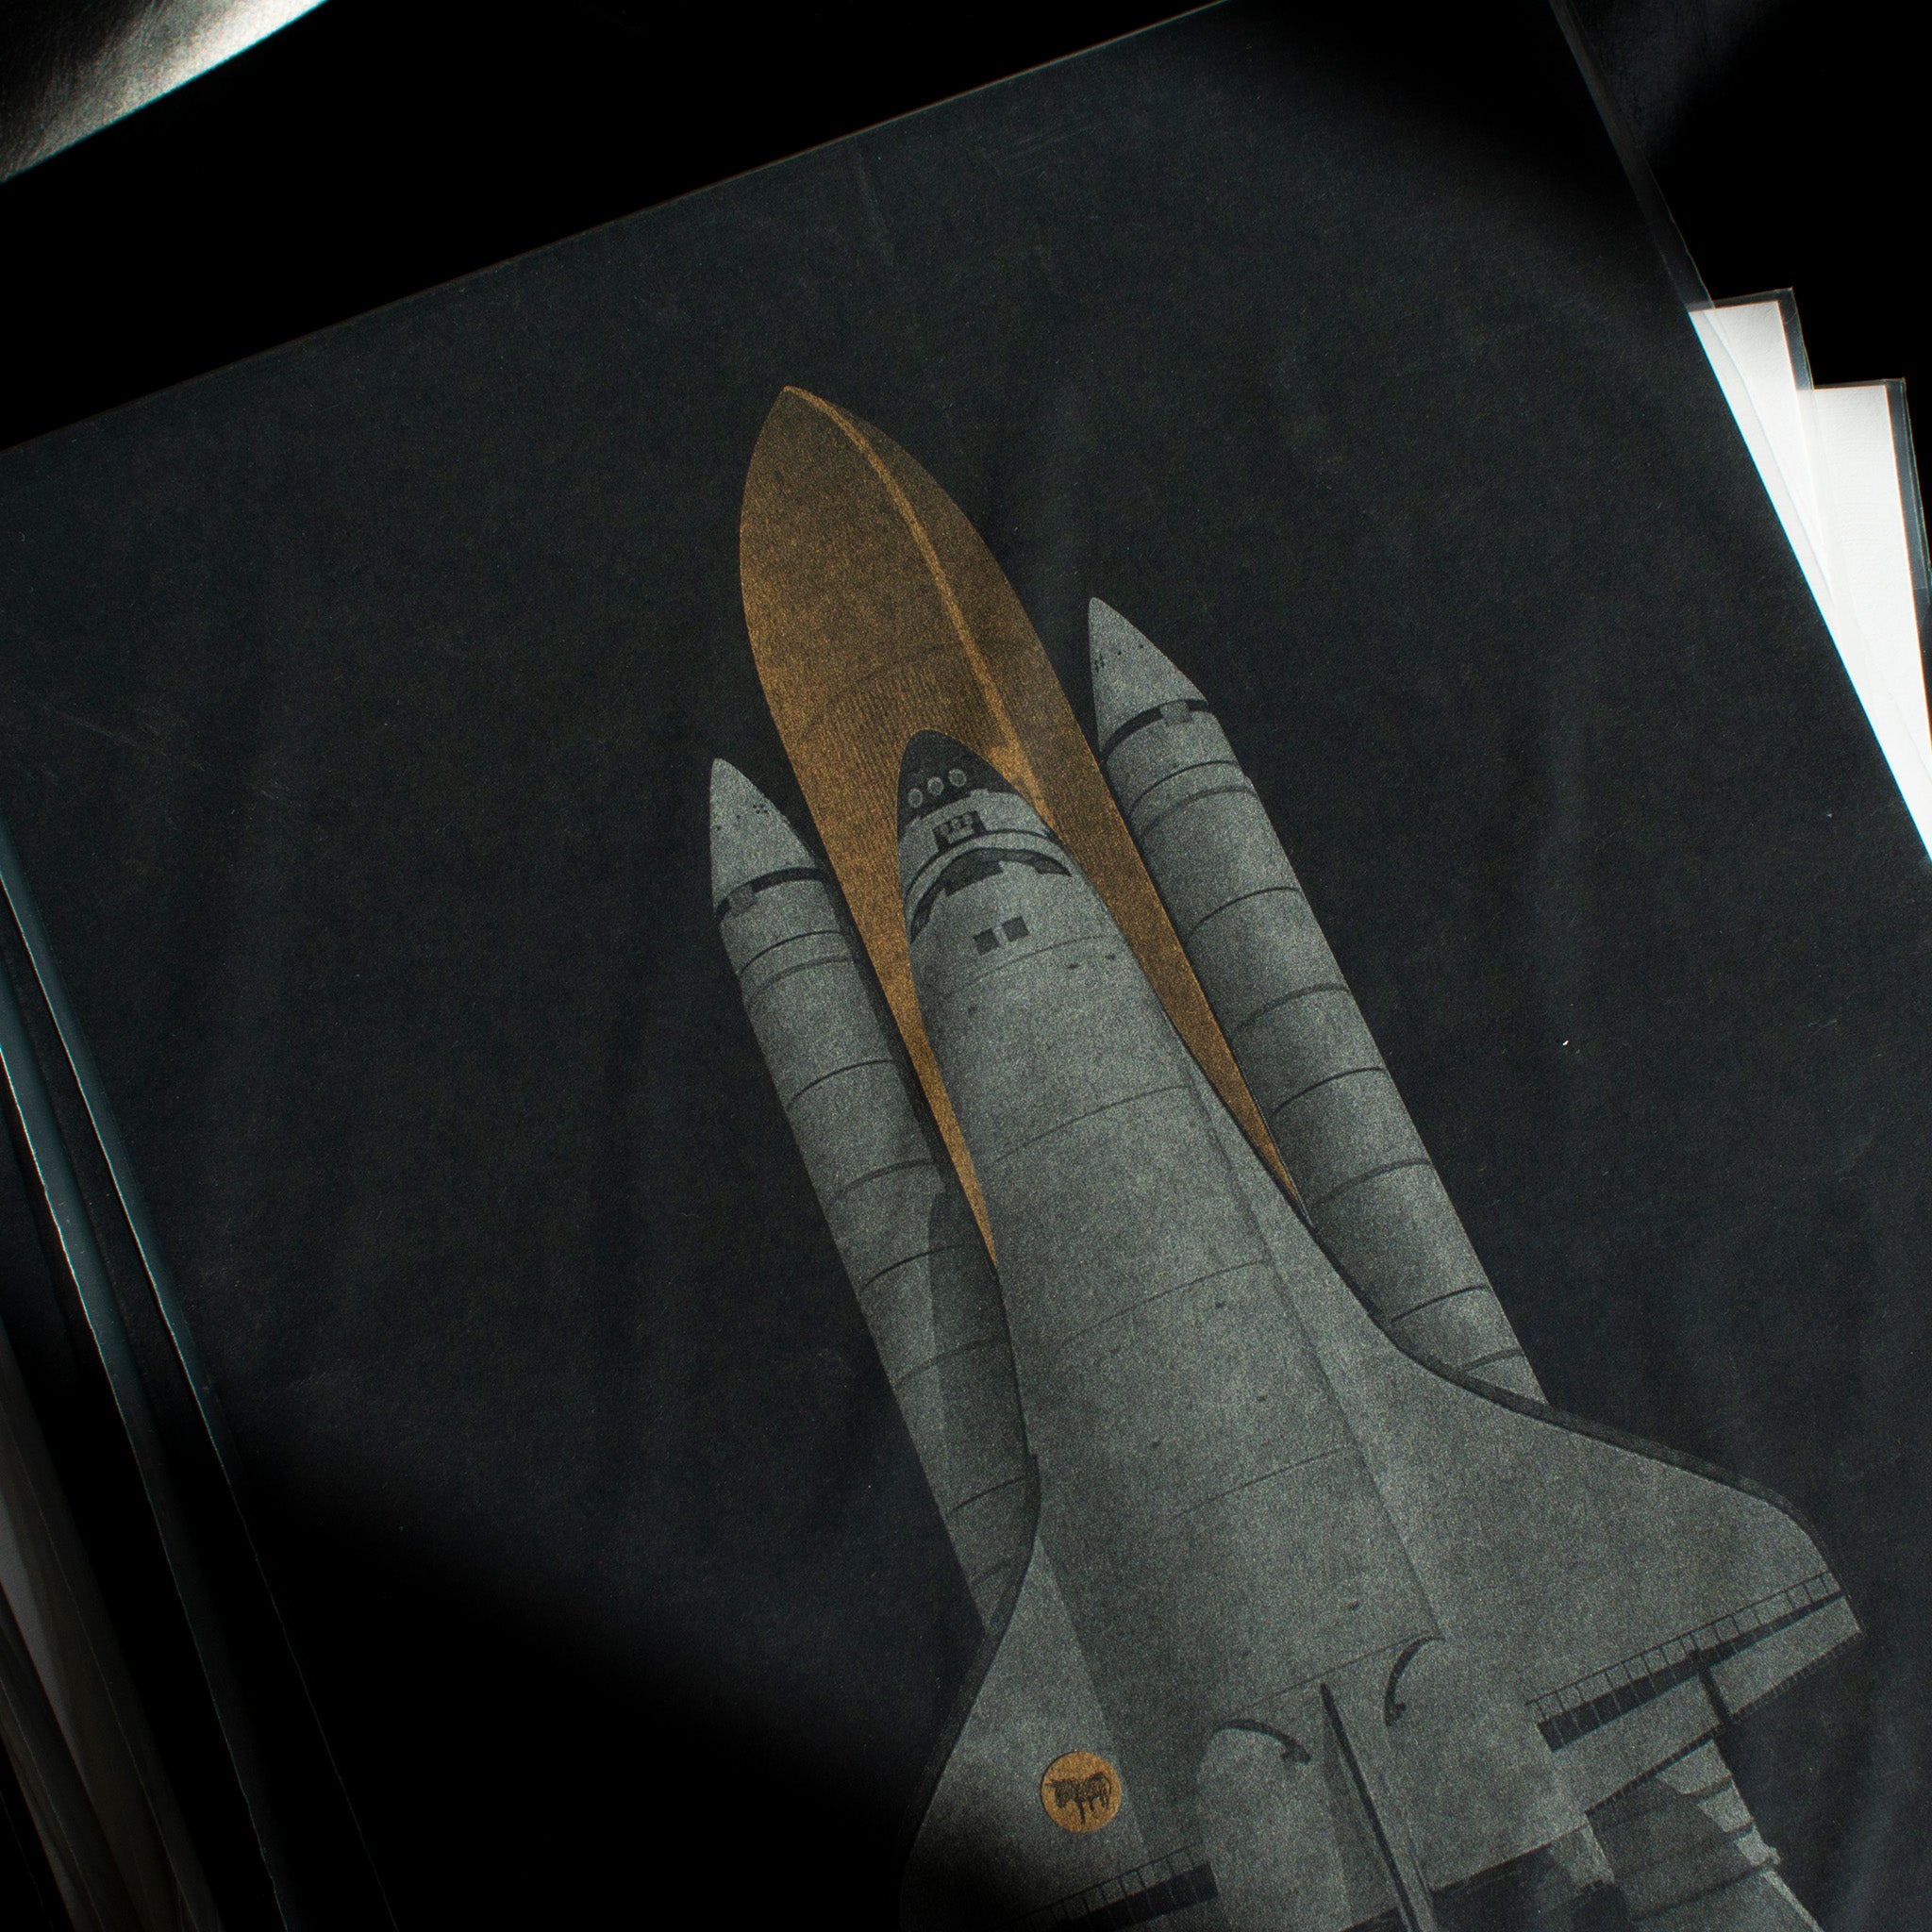 Risography Artprint Space Shuttle